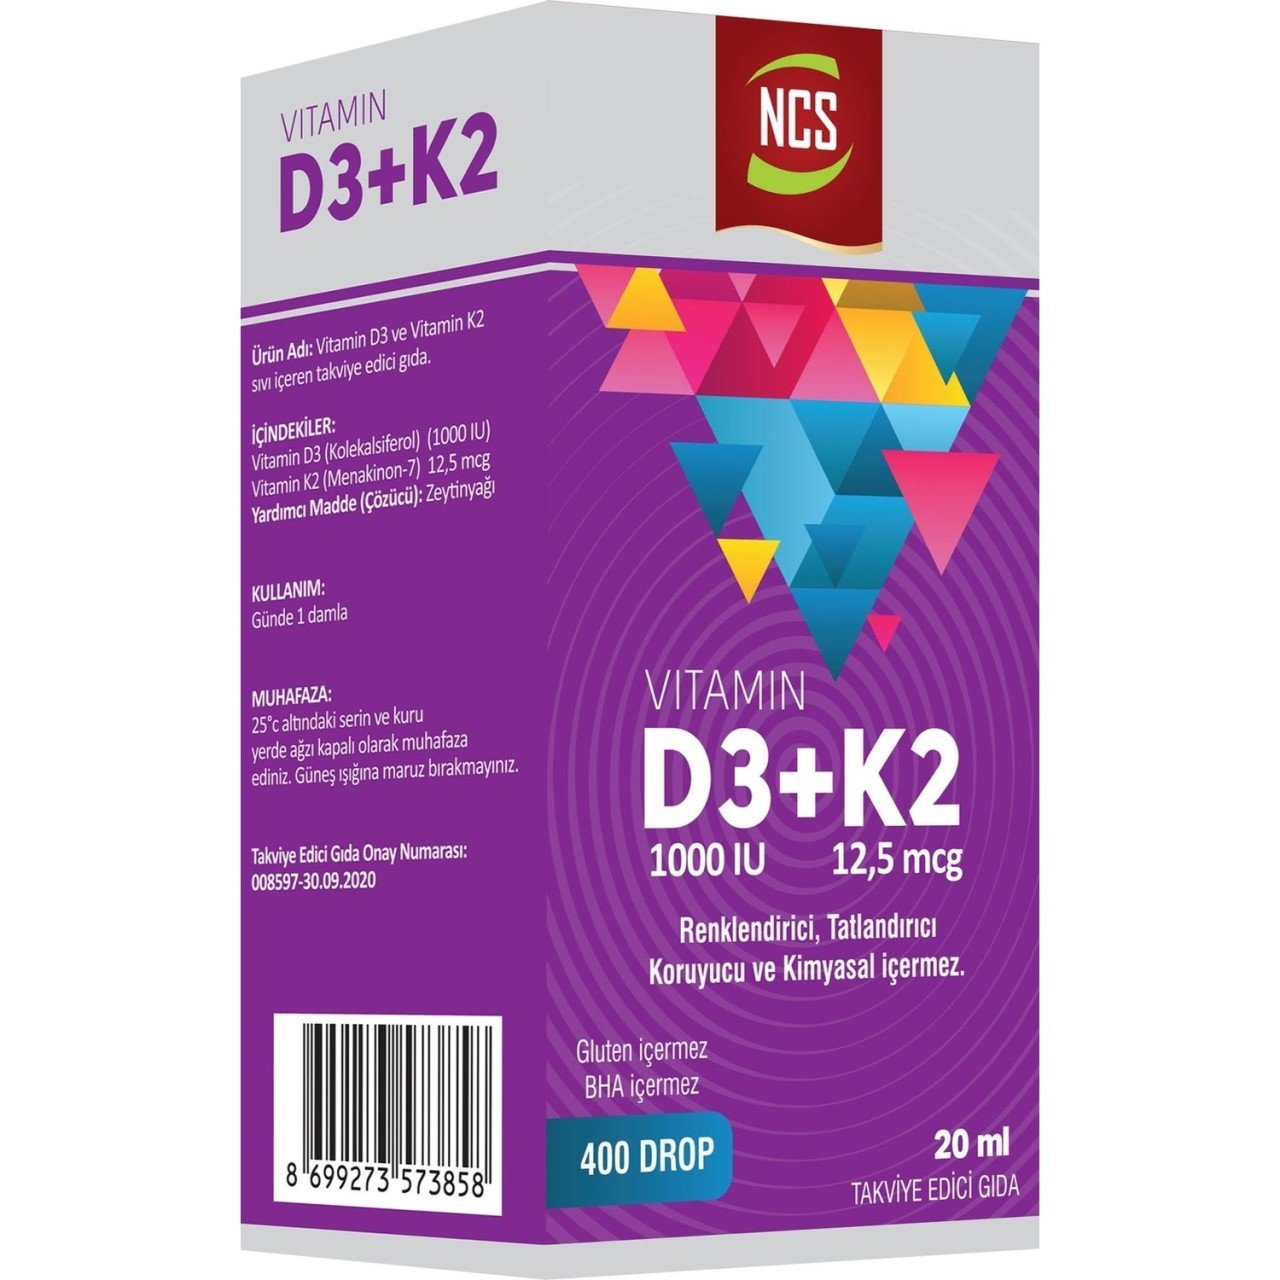 Ncs Vitamin D3 + K2 Damla 20 ml